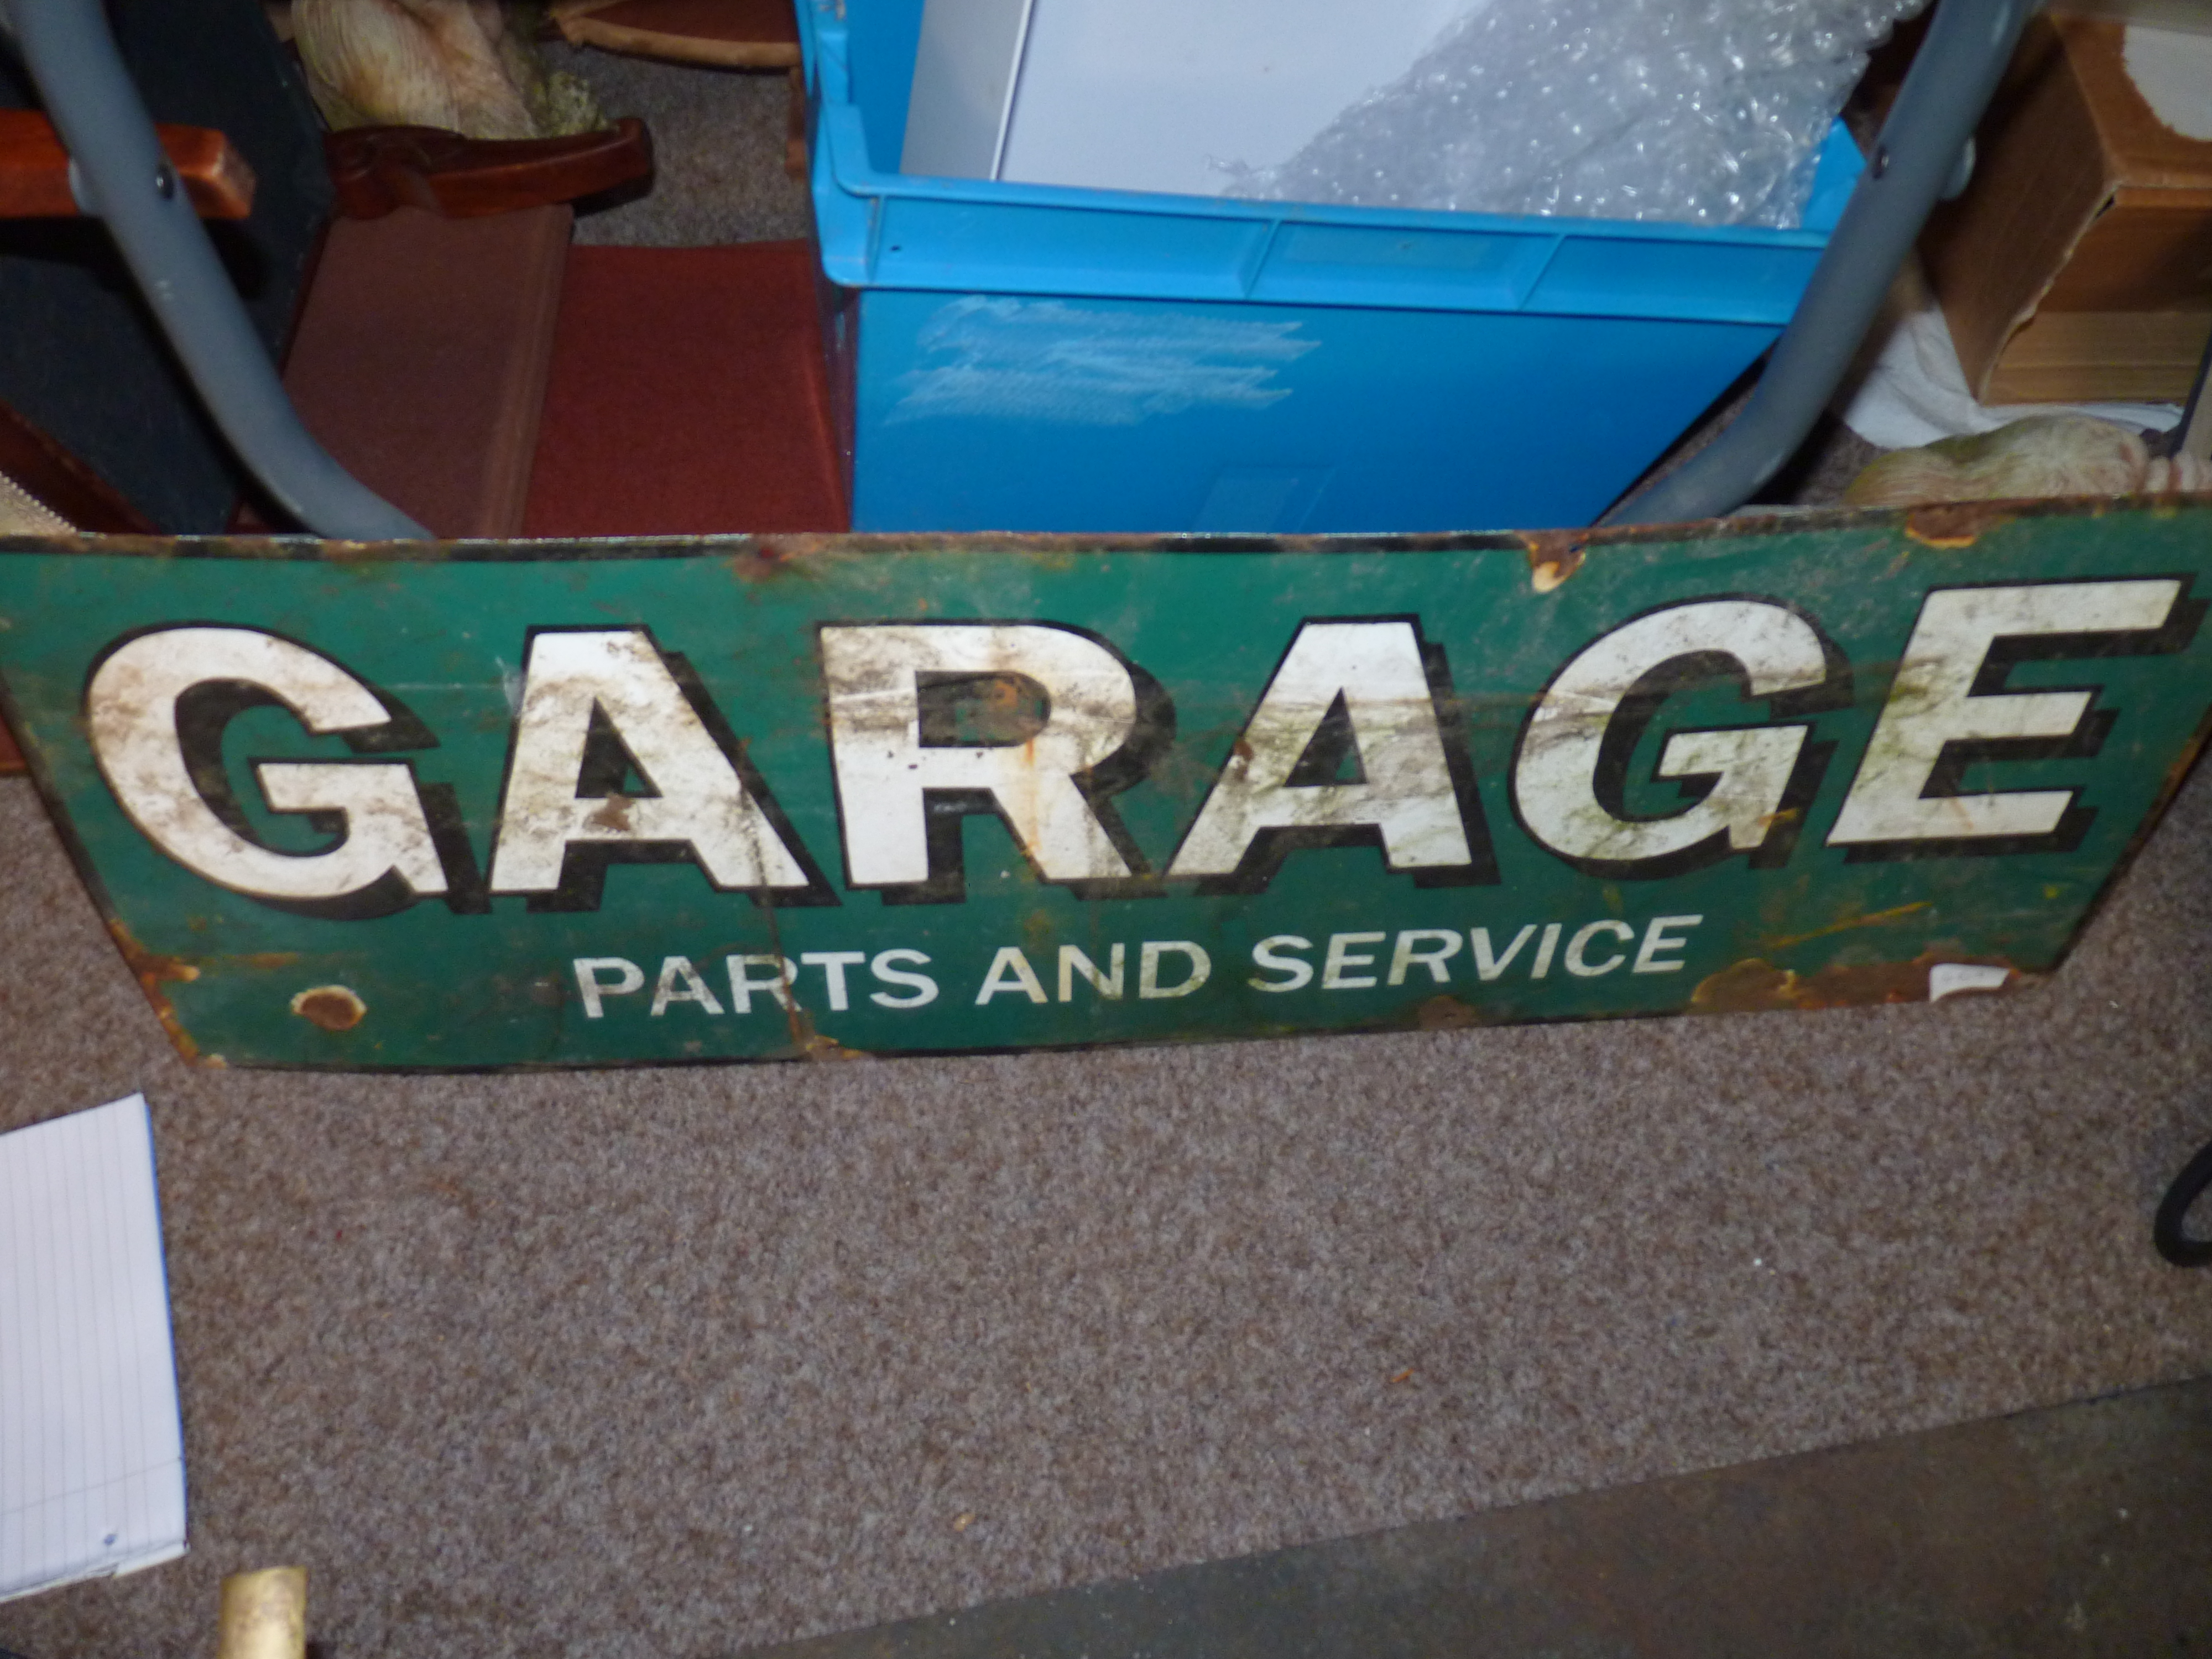 Garage parts and service' enamel sign 91cm x 30cm - Image 2 of 2